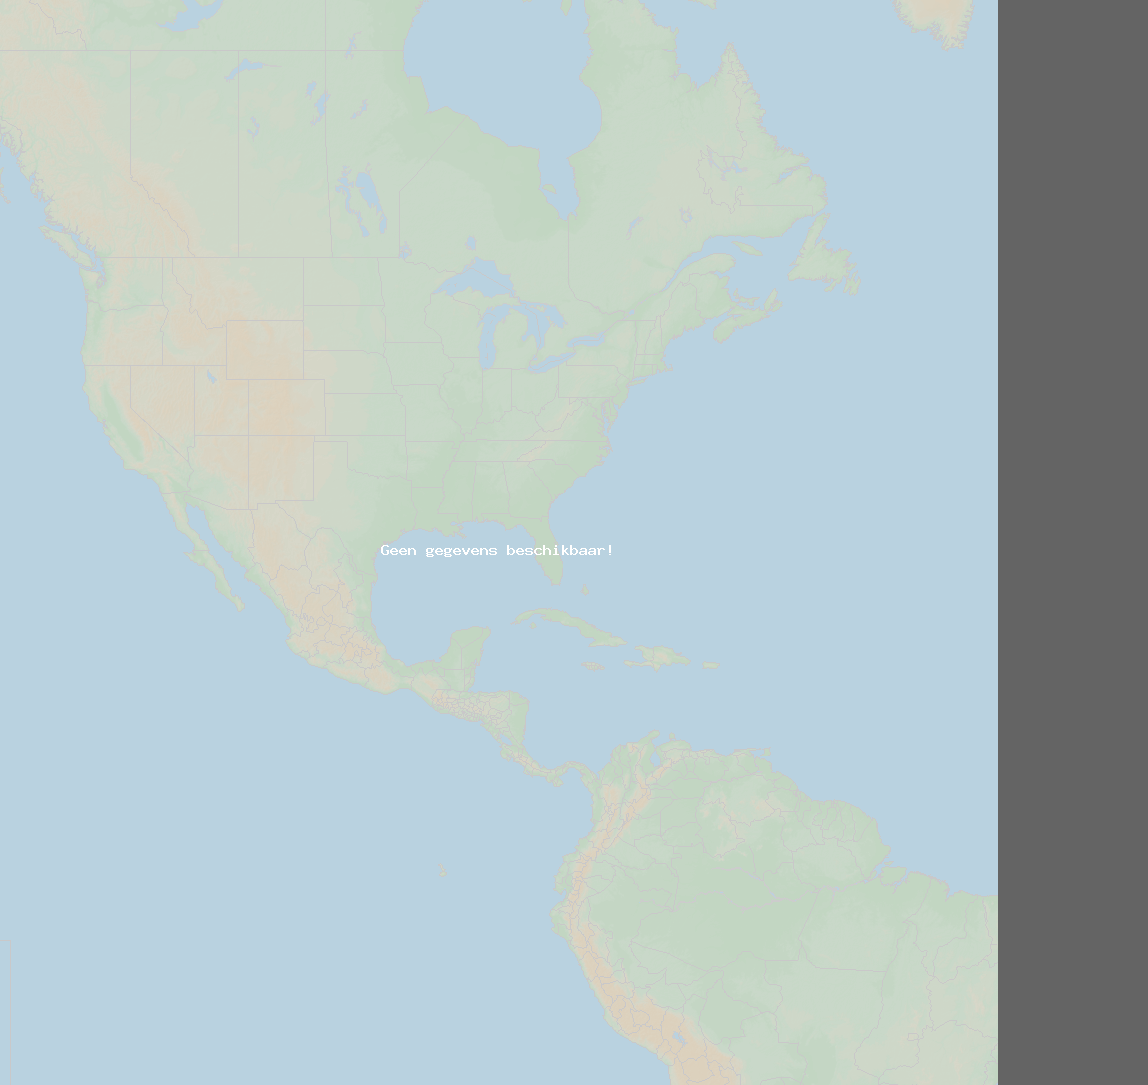 Inslagverhouding (Station Baie-Comeau QC) North America 2019 september